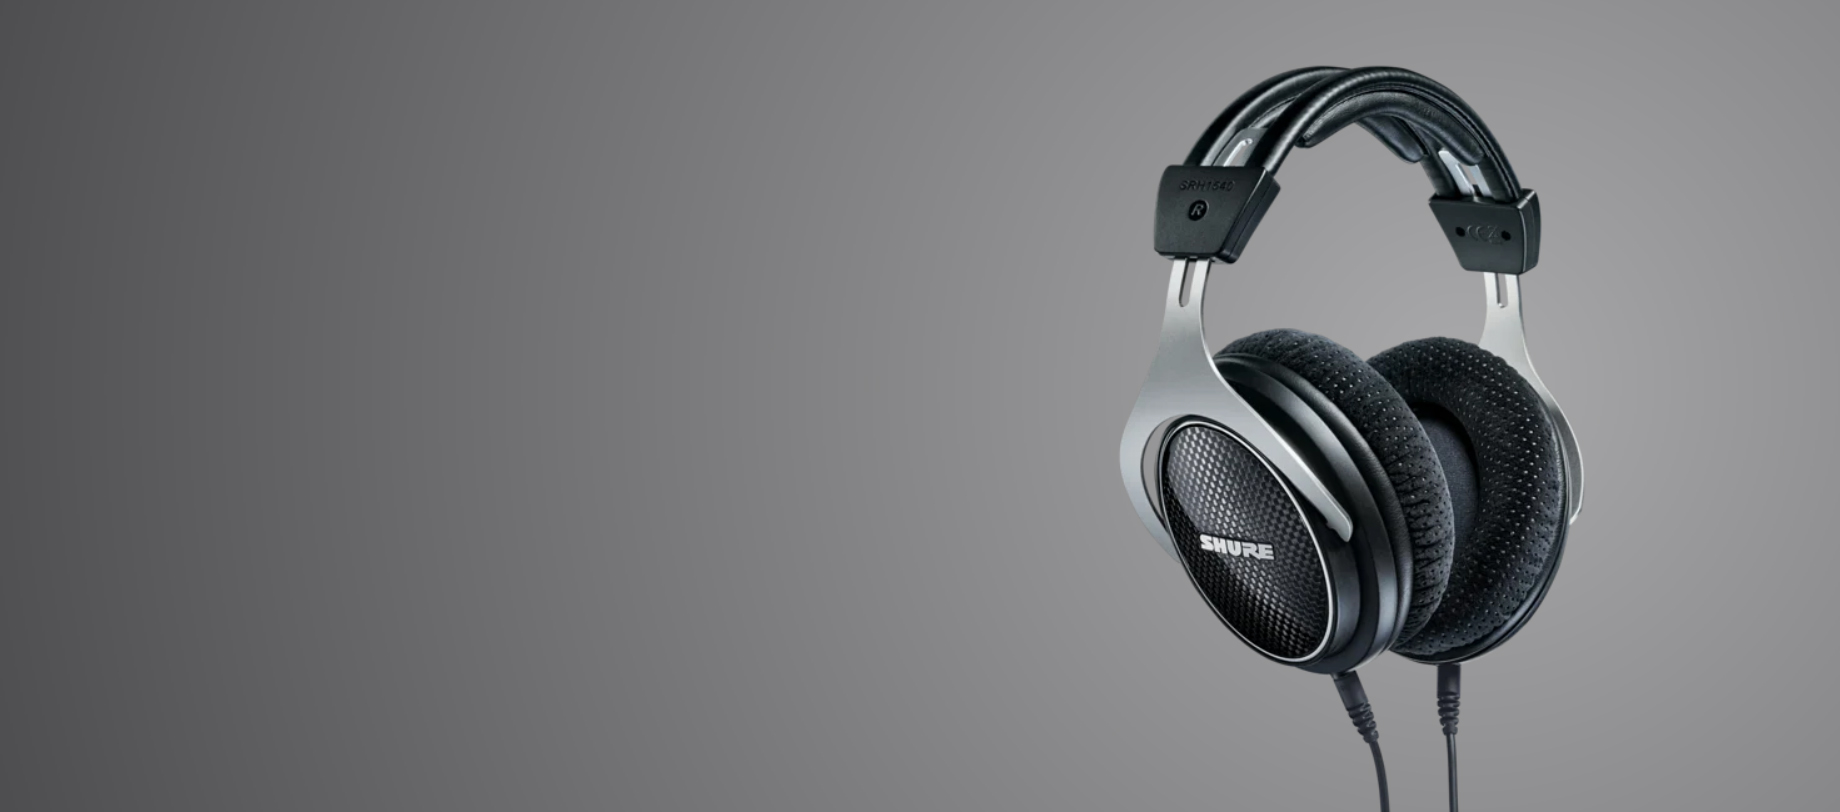 Shure SRH1540 Premium Closed-Back Headphones - Black Headphones